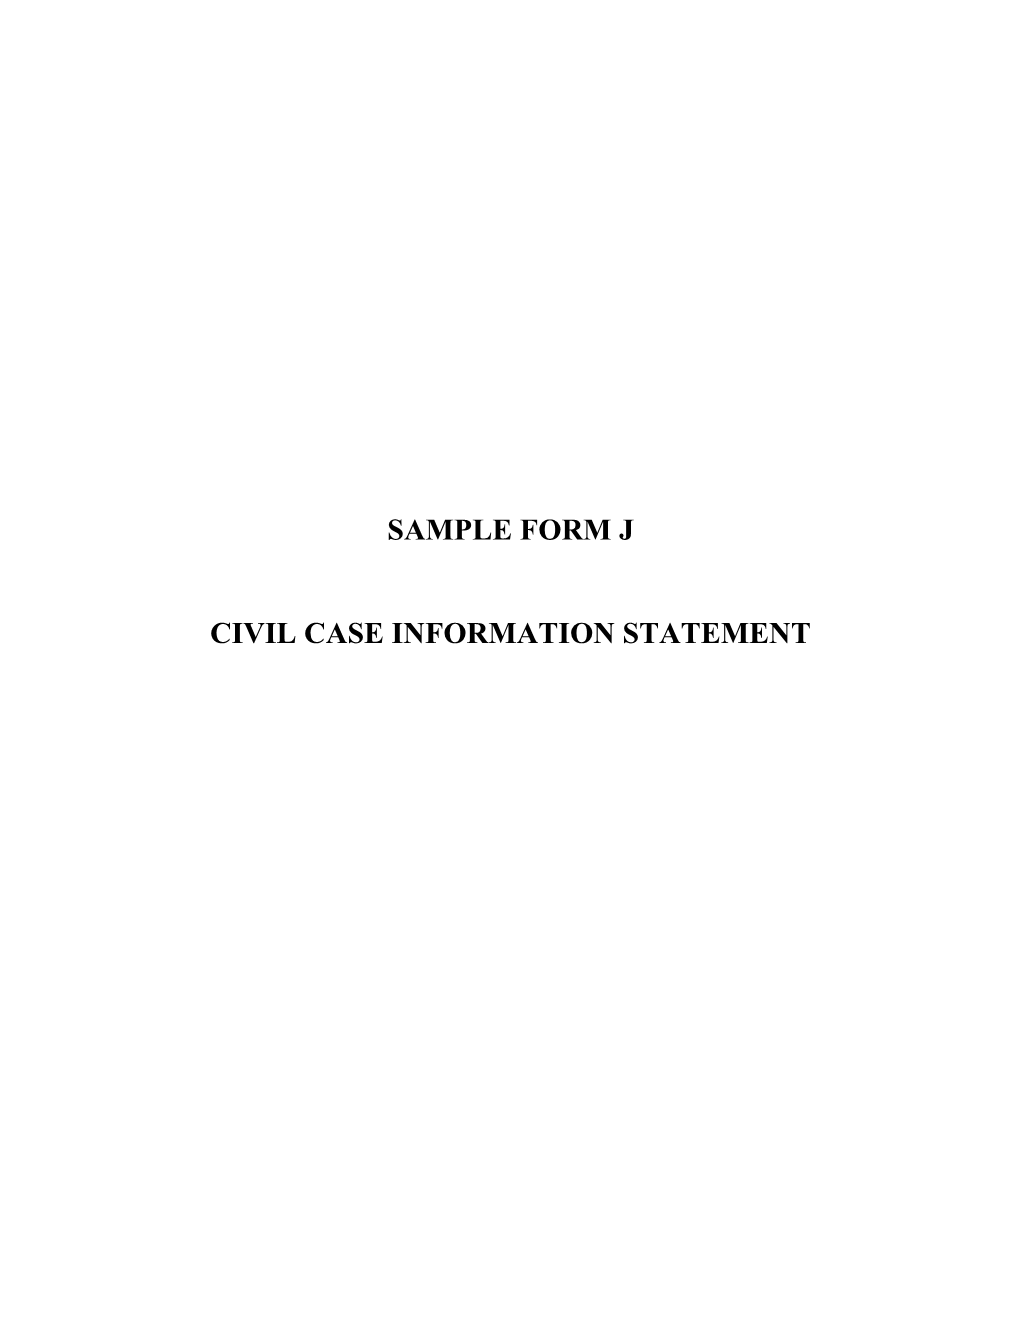 Civil Case Information Statement Civil Case Information Statement - Instructions